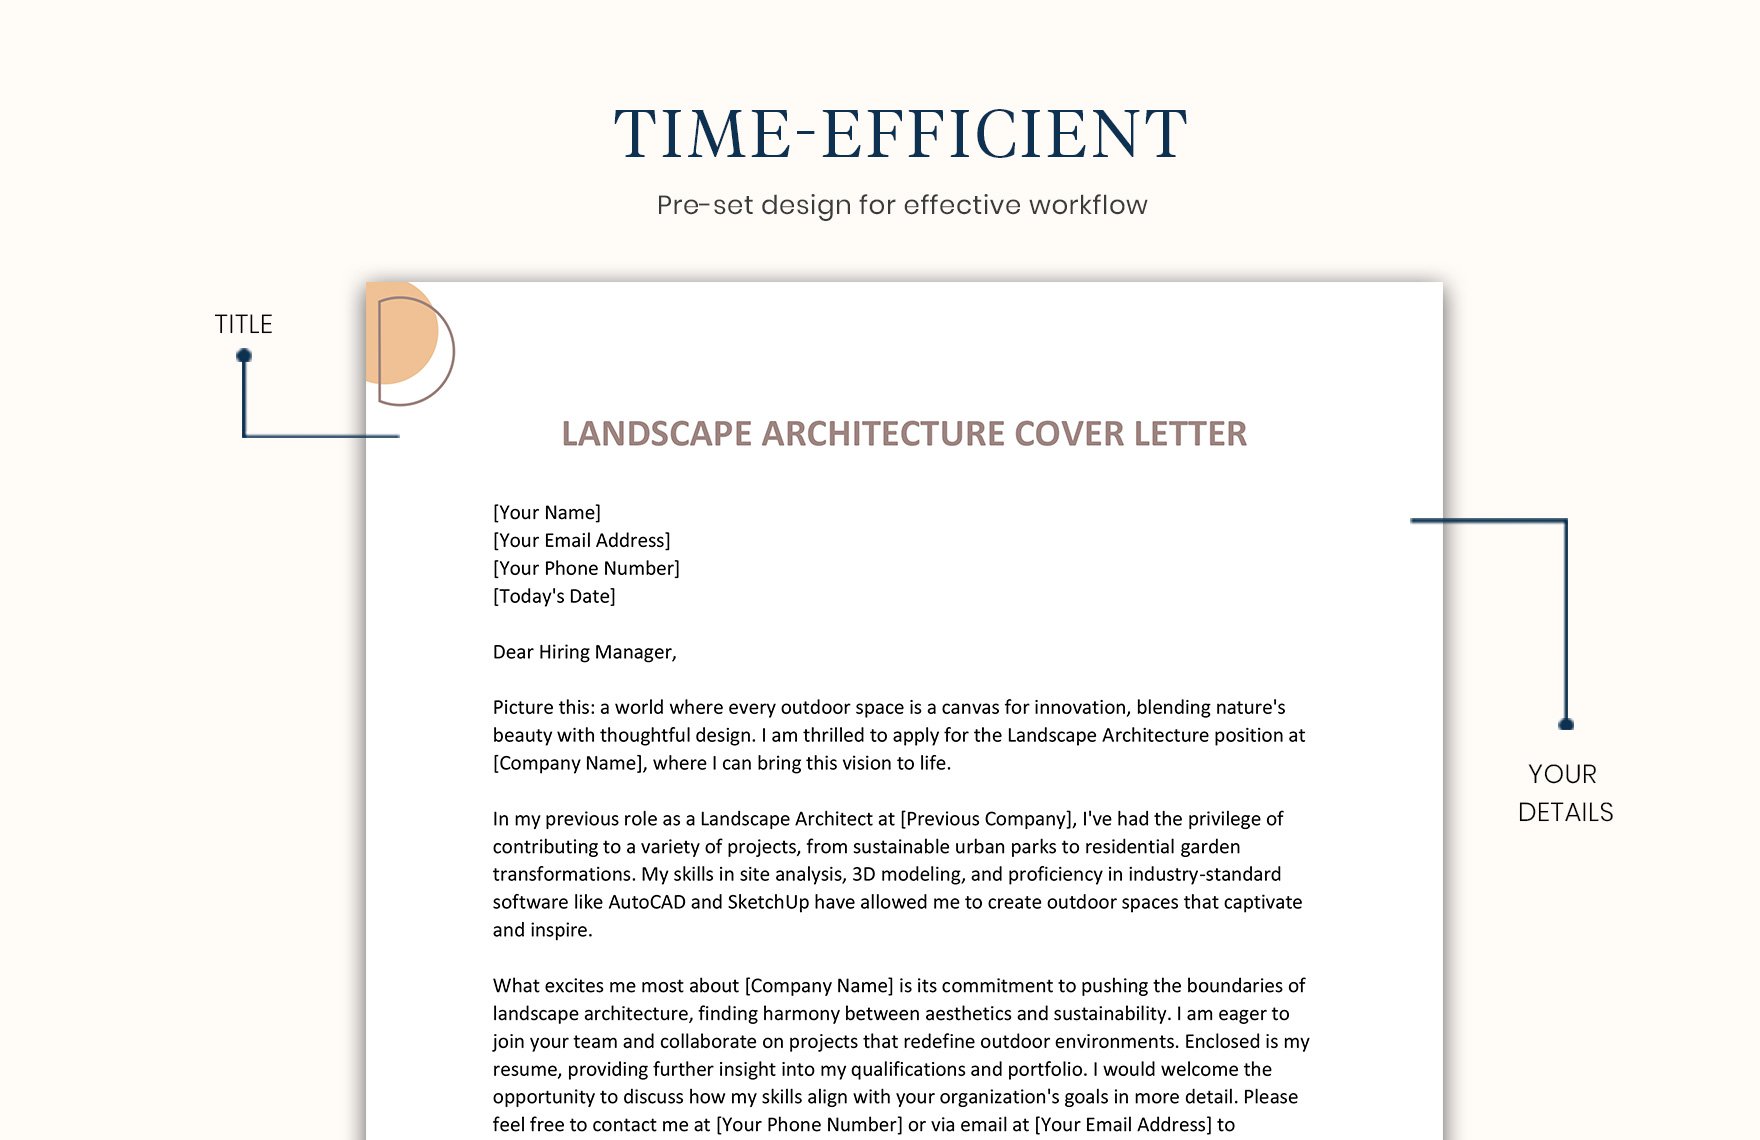 Landscape Architecture Cover Letter